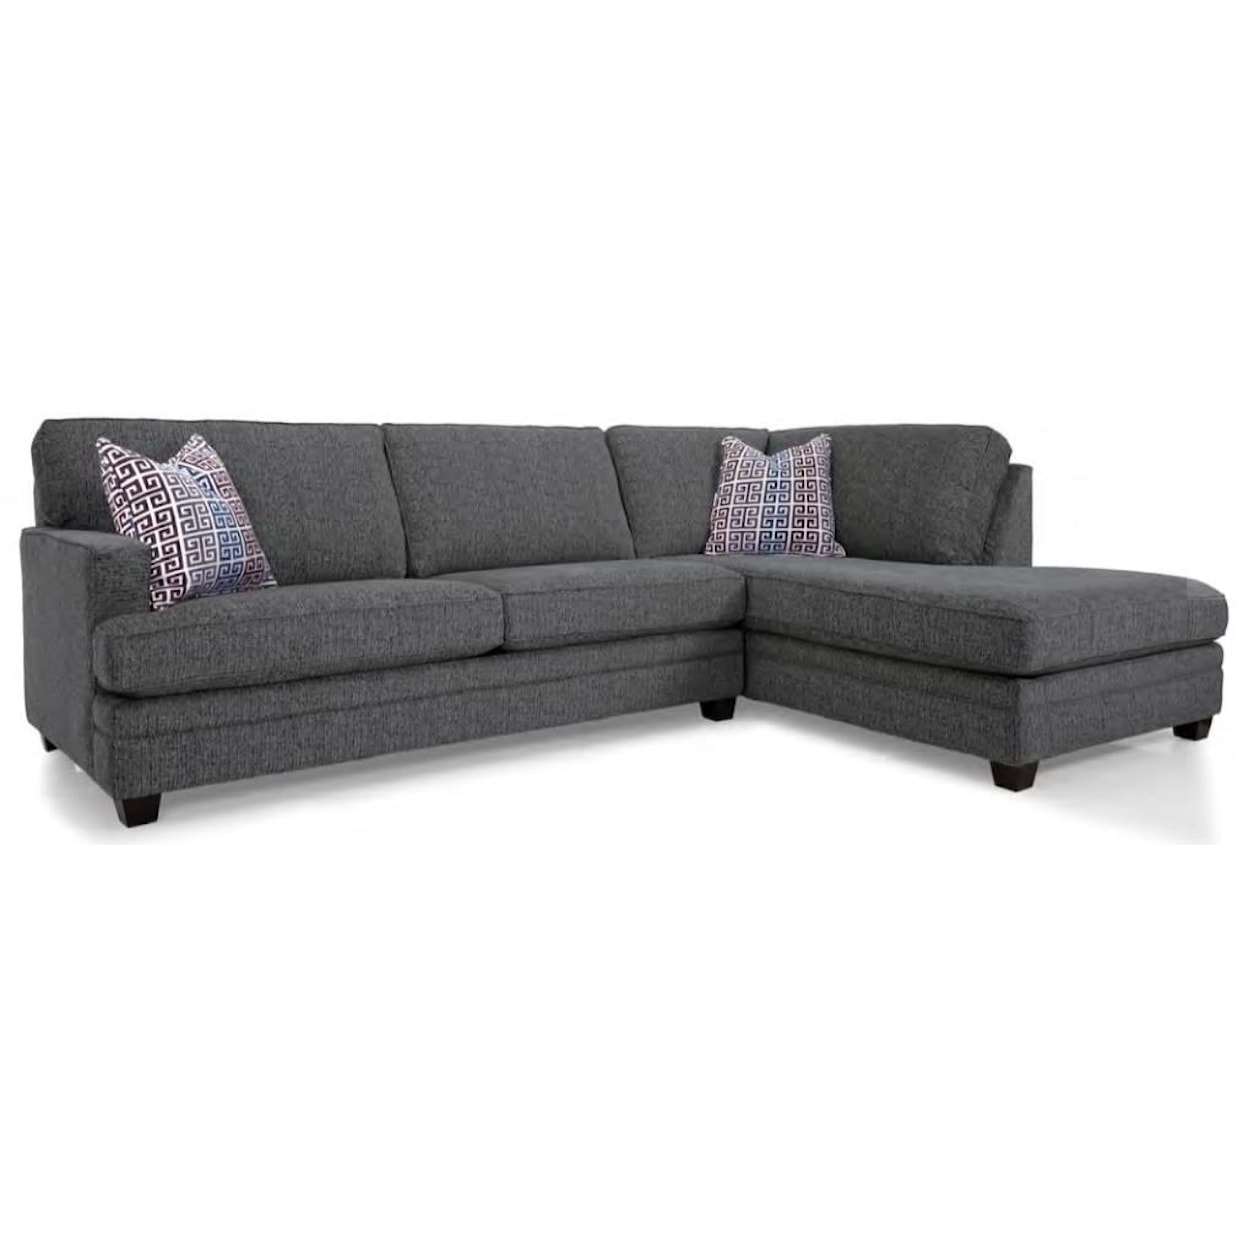 Decor-Rest 2696 Sectional Sofa